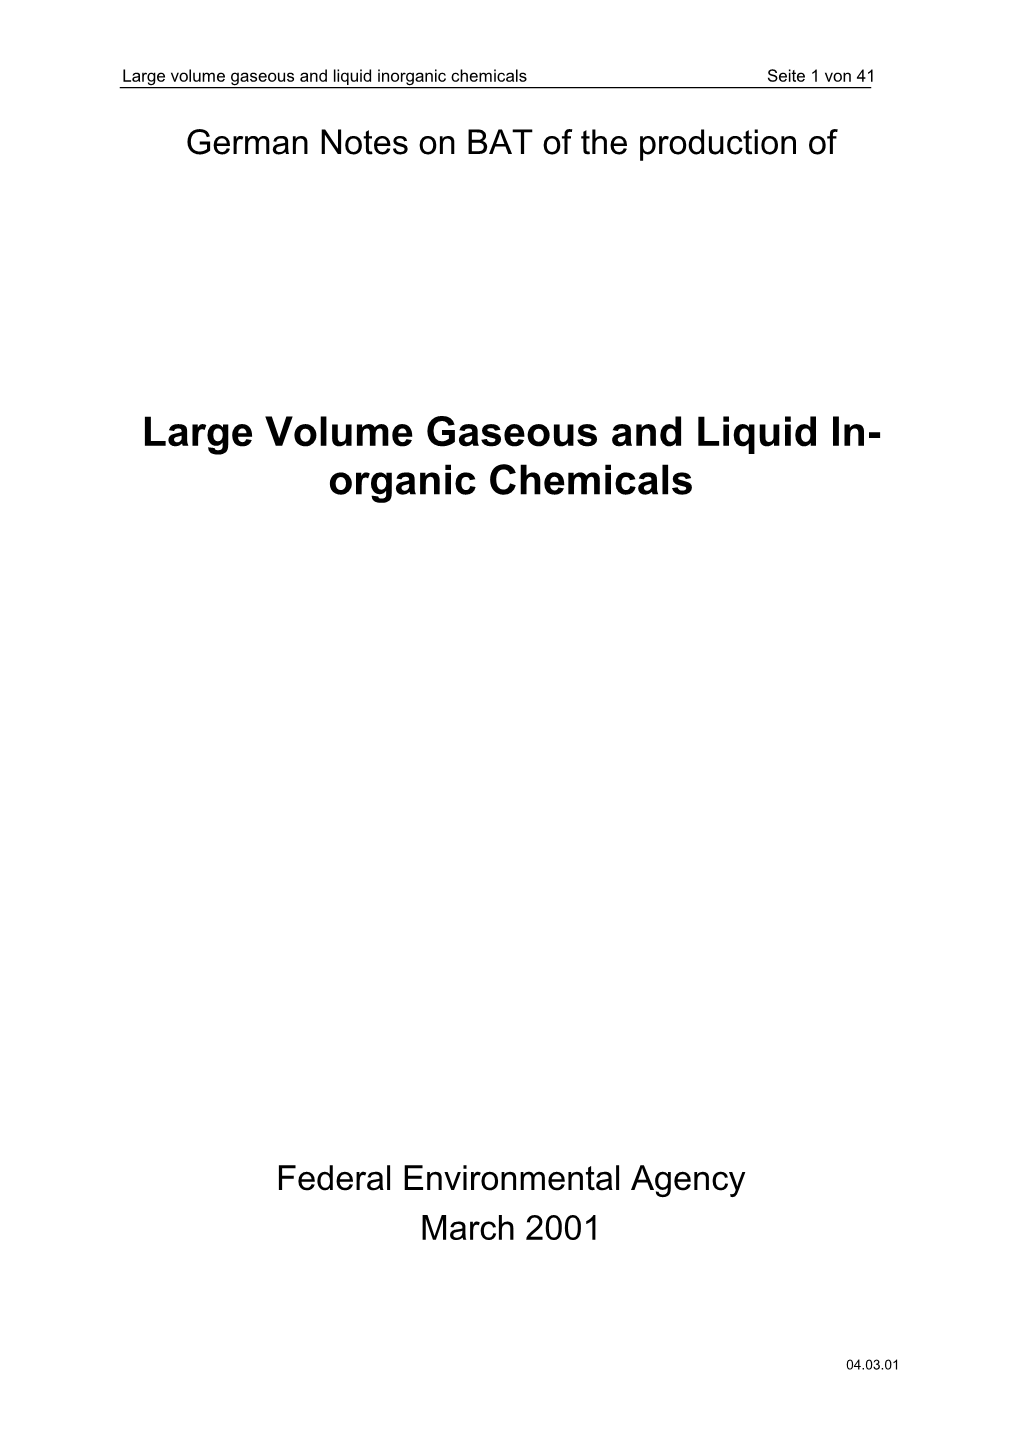 Large Volume Gaseous and Liquid Inorganic Chemicals Seite 1 Von 41